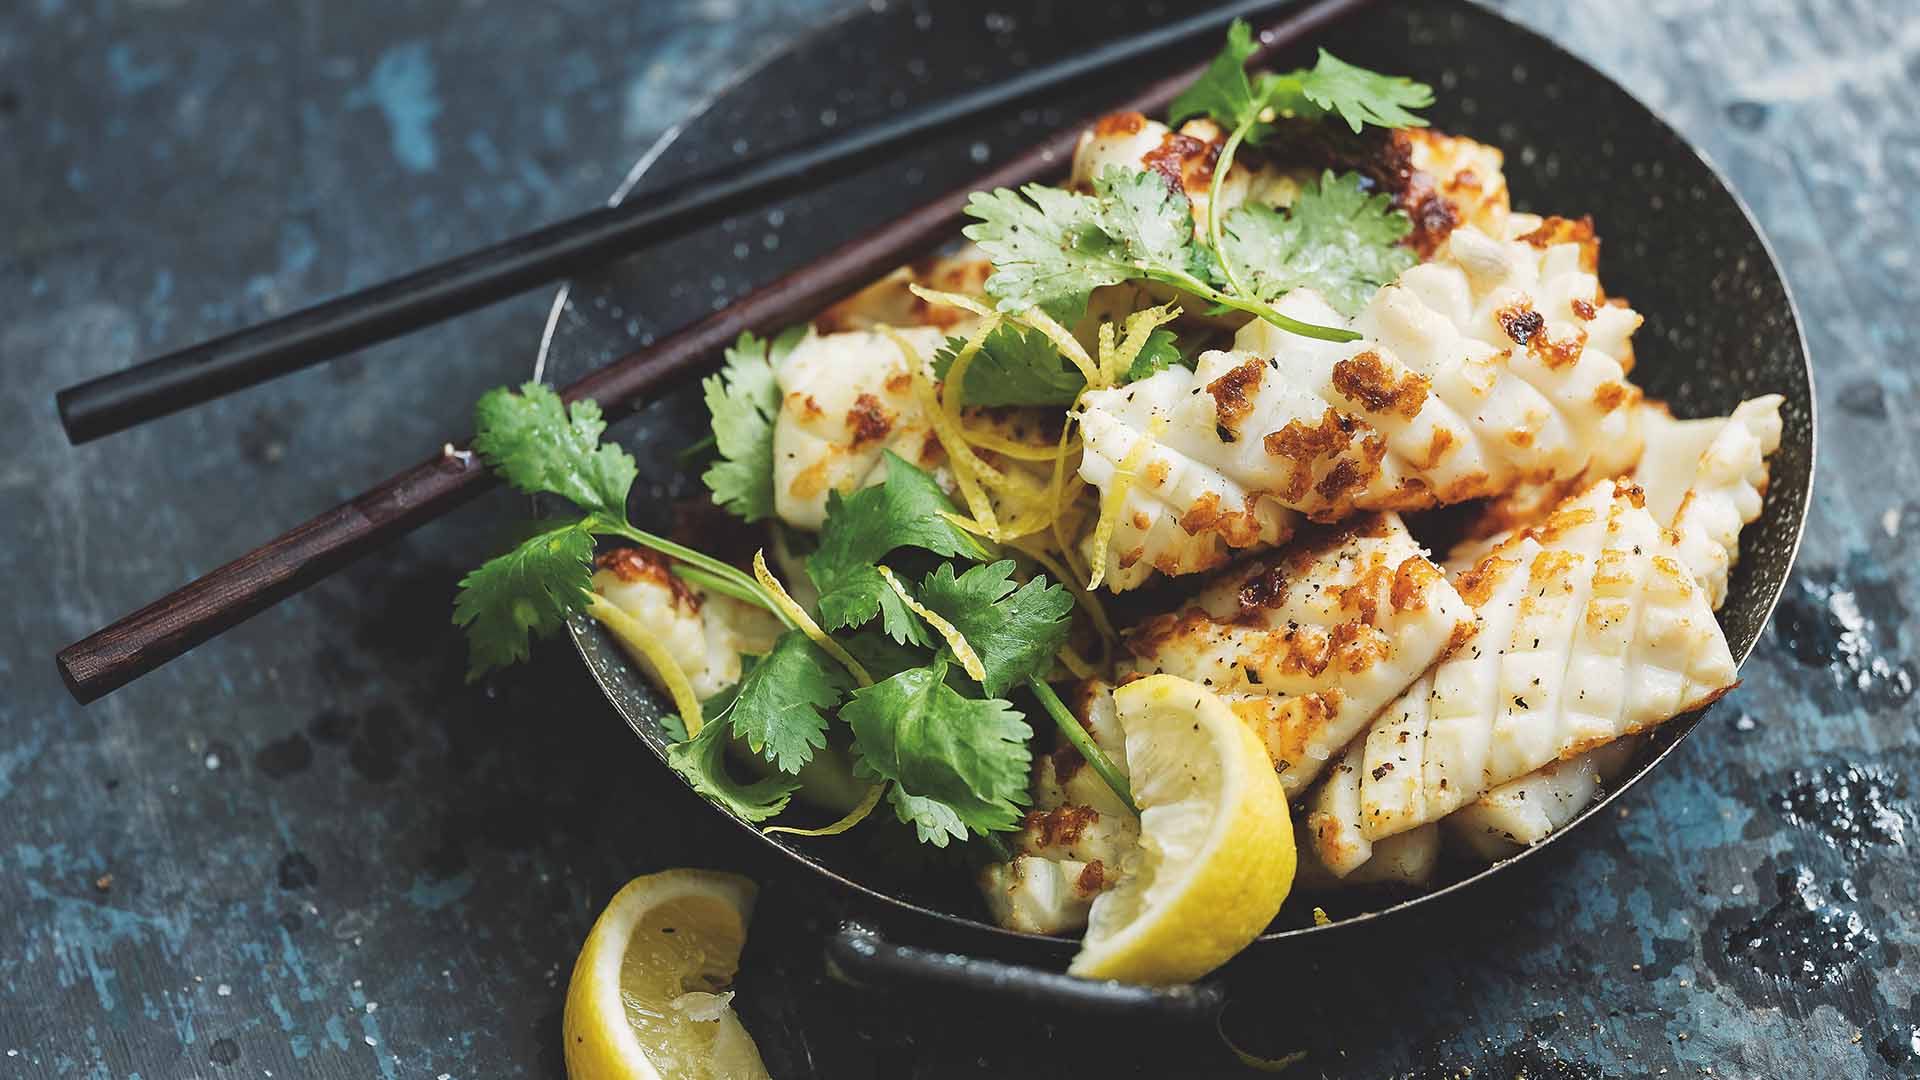 Zesty lemon grilled calamari with garlic recipe | Live Better